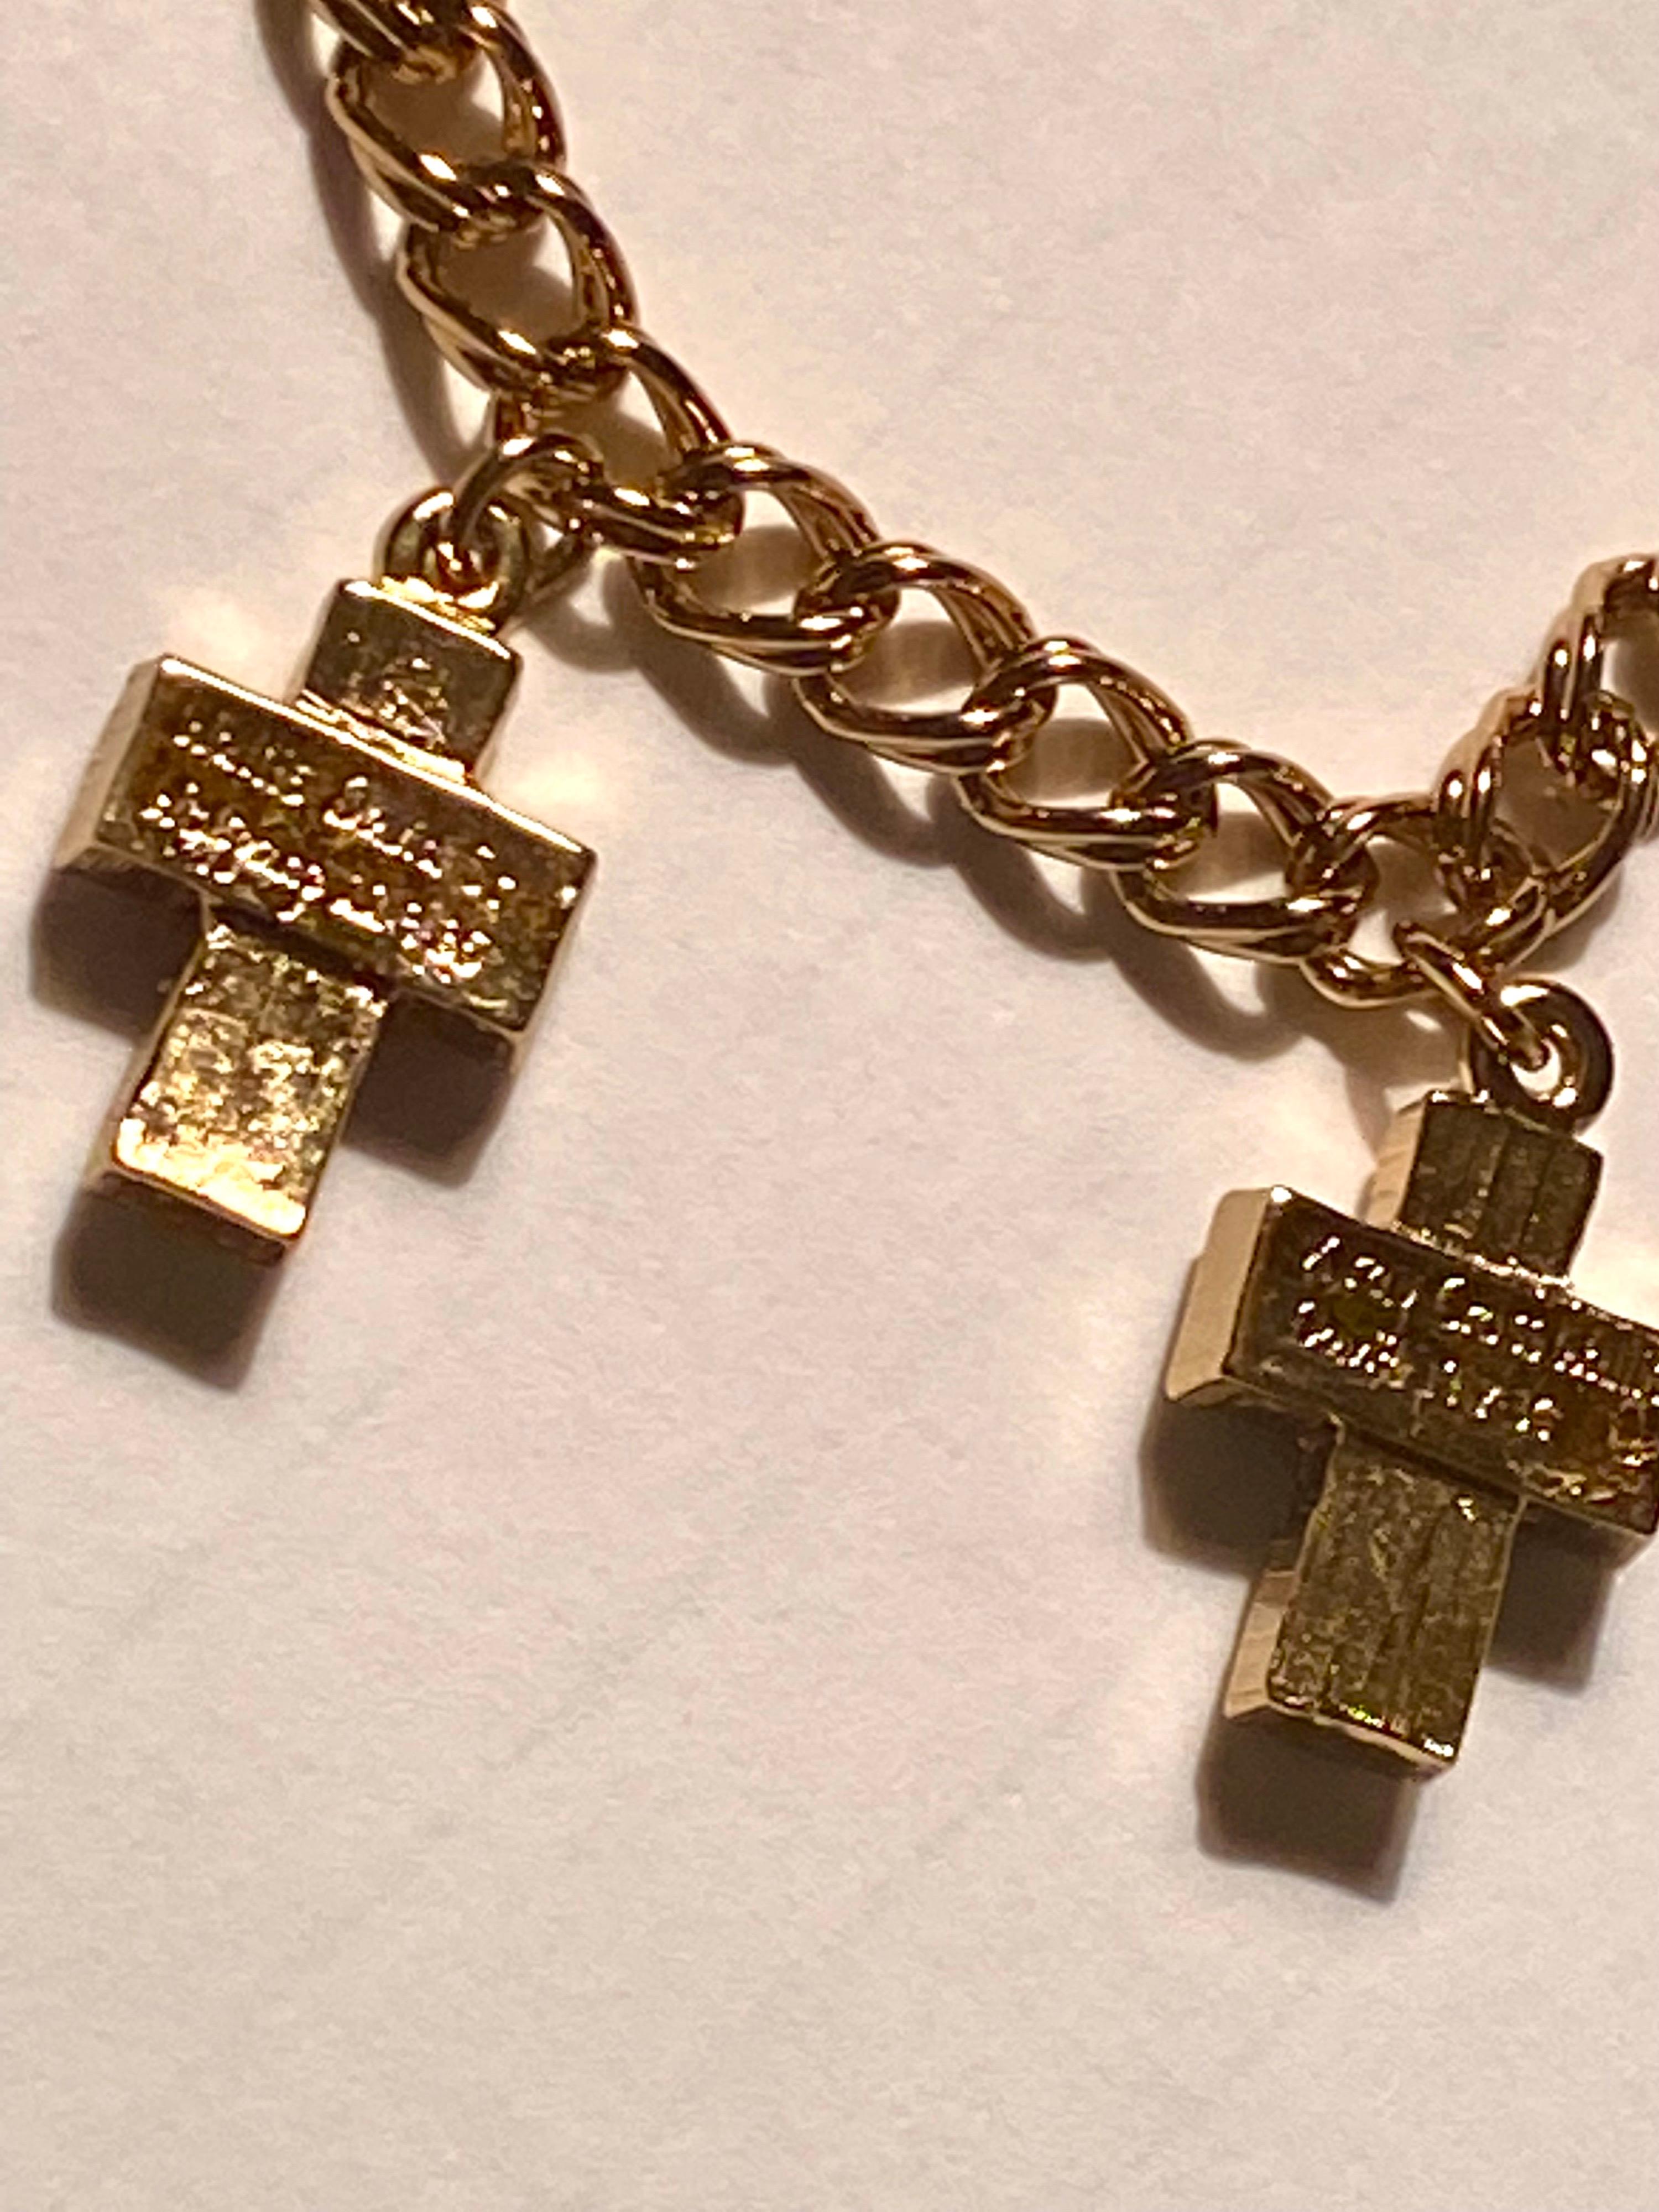 Duchess of Windsor Jeweled Gold Cross Replica Charm Bracelet 13